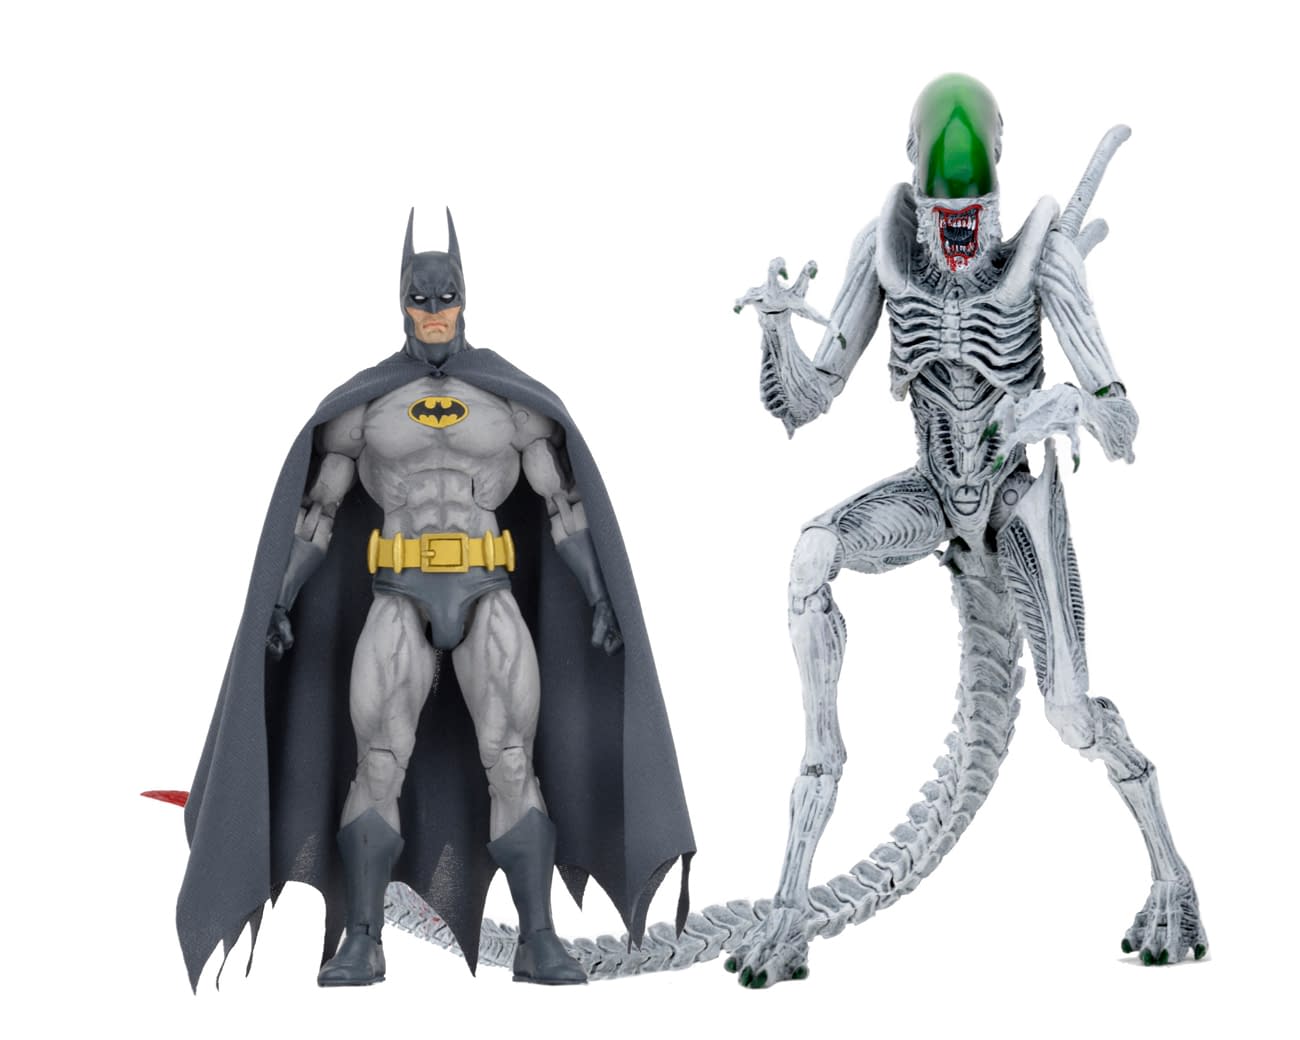 NECA Reveals NYCC Pre-Sale Details for Joker/ Predator Two-Packs